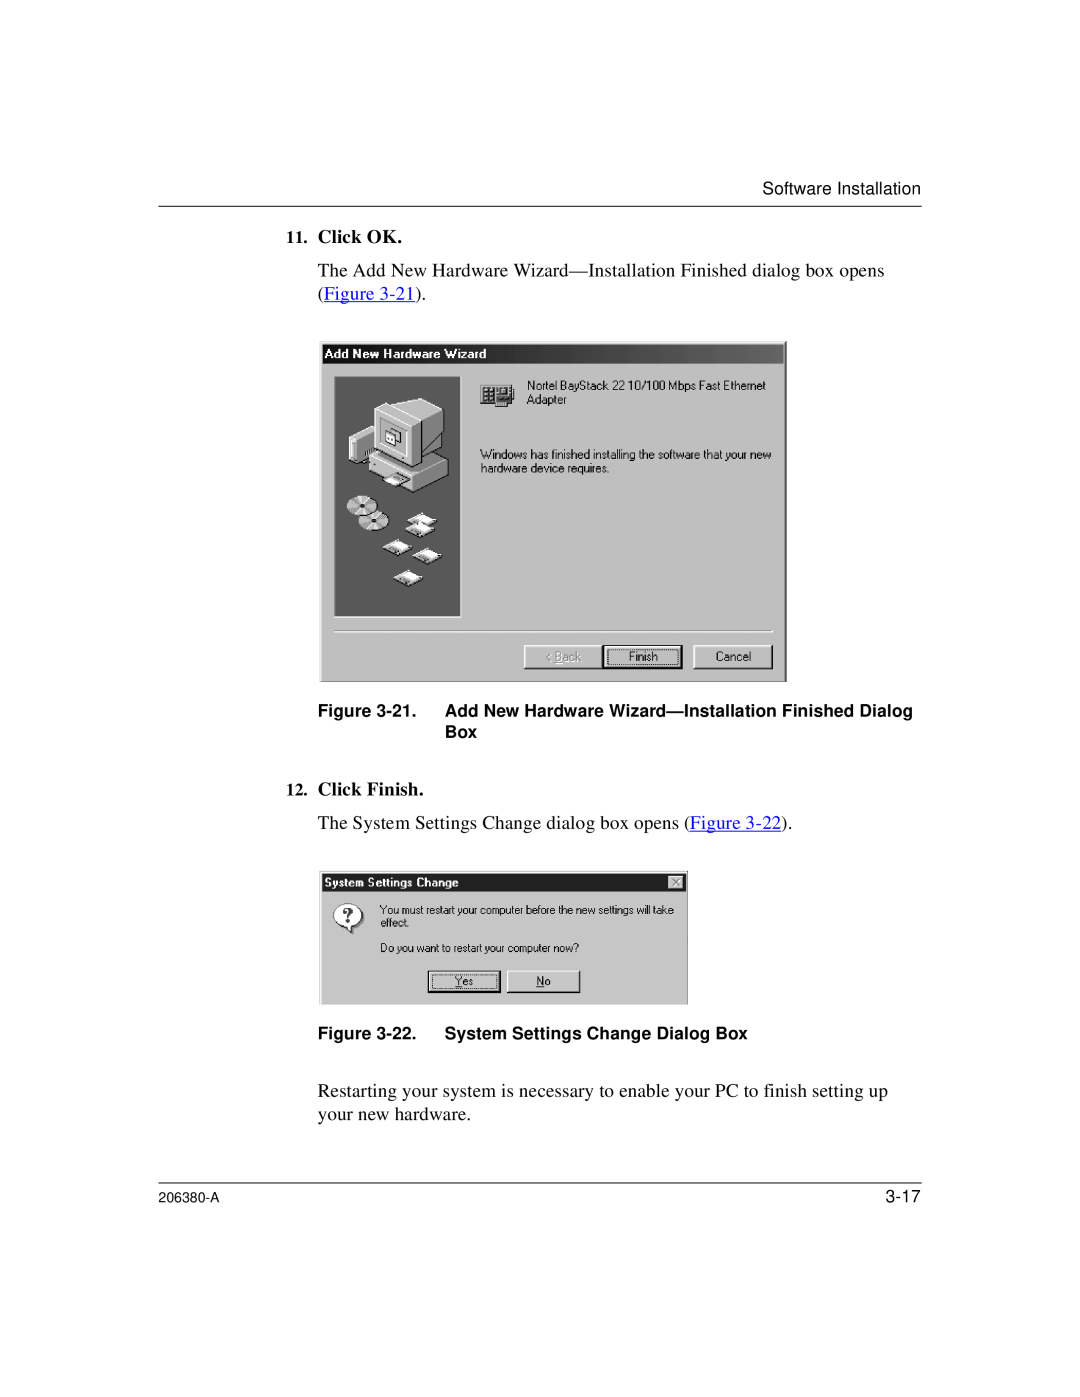 3Com 206380-A manual Click OK, Click Finish, 22.System Settings Change Dialog Box 